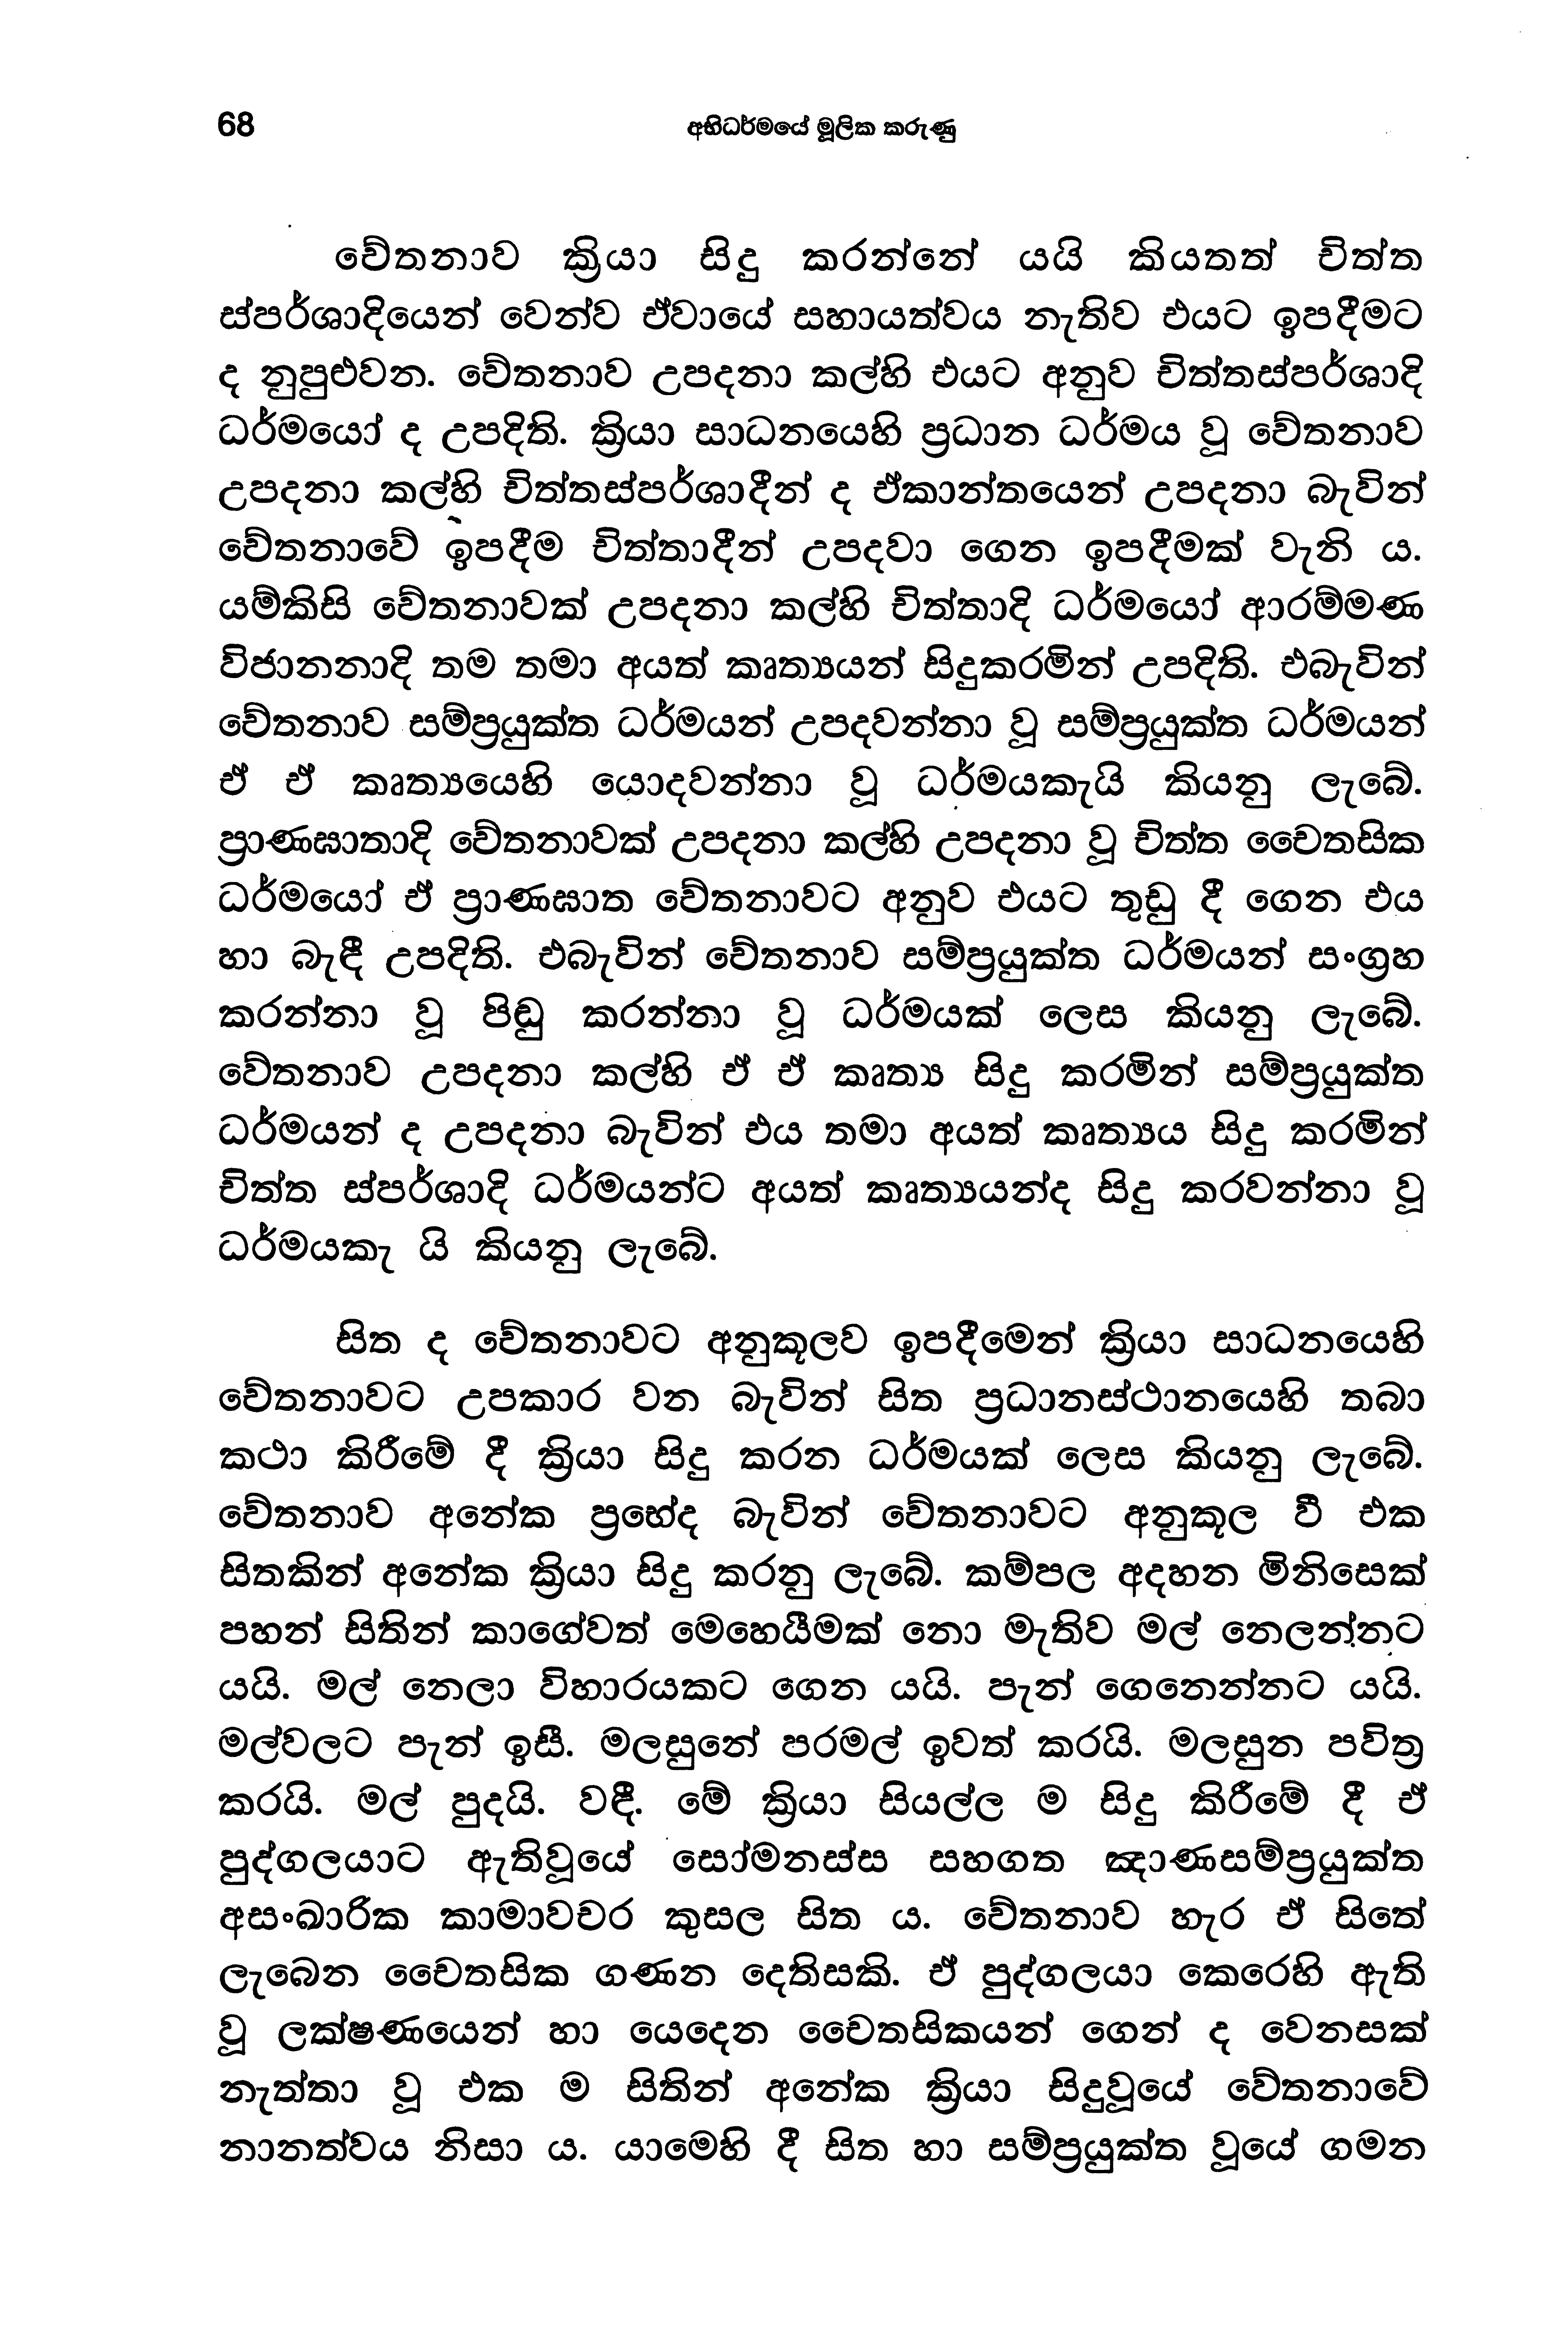 abhidharmaye-mulika-karunu-rerukane-chandavimala-nahimi-full-book-with-comments-highlights-and-book-marks_page_066